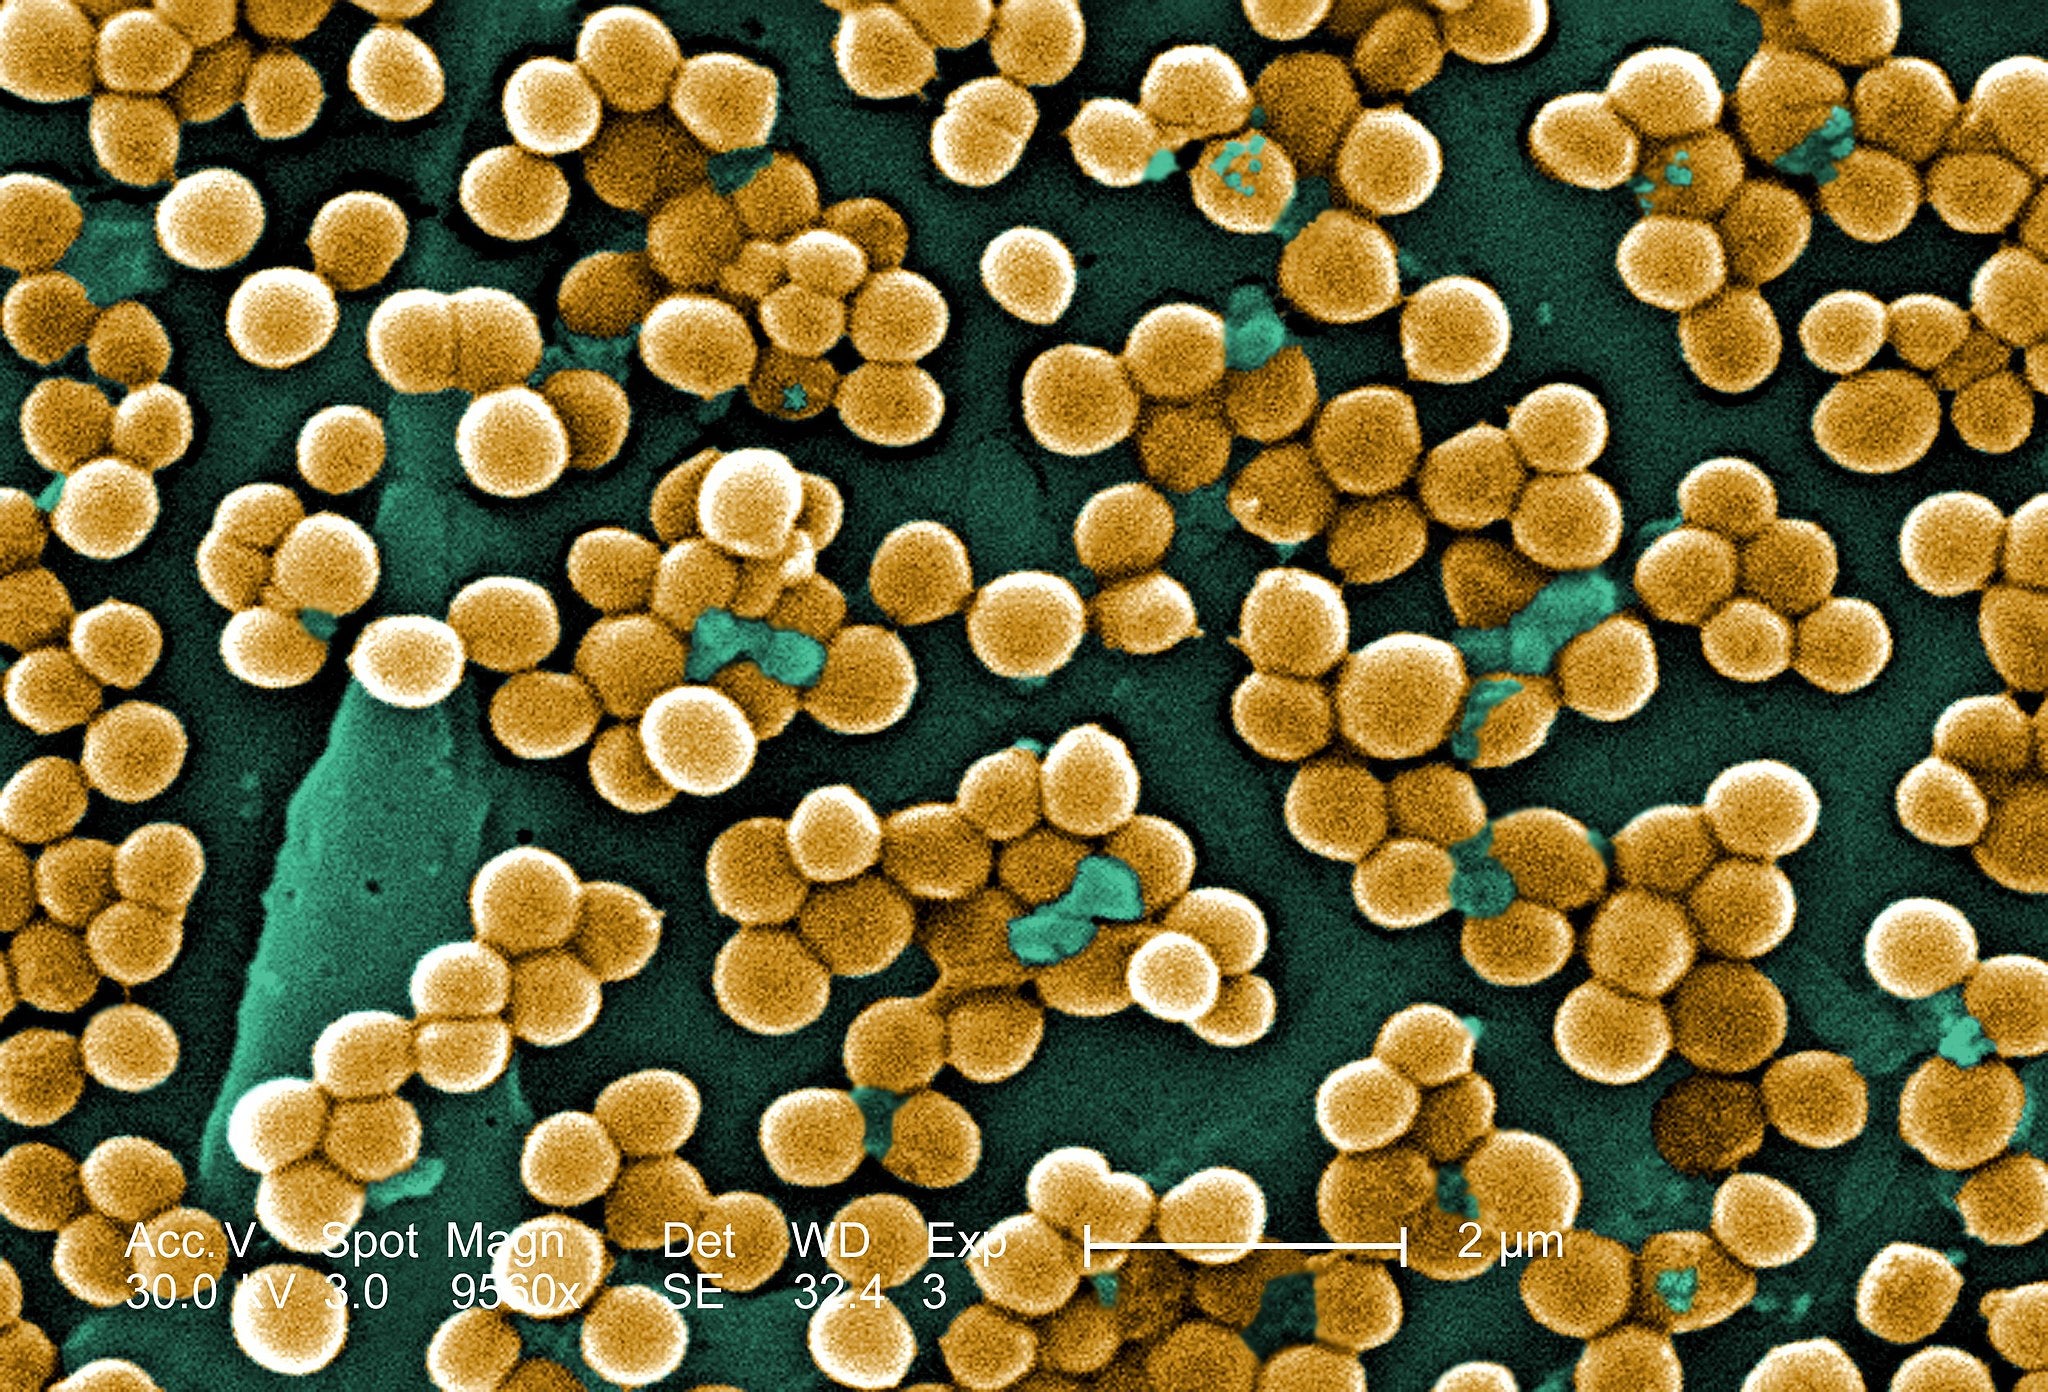 The Missing Link in Fighting Antibiotic Resistance